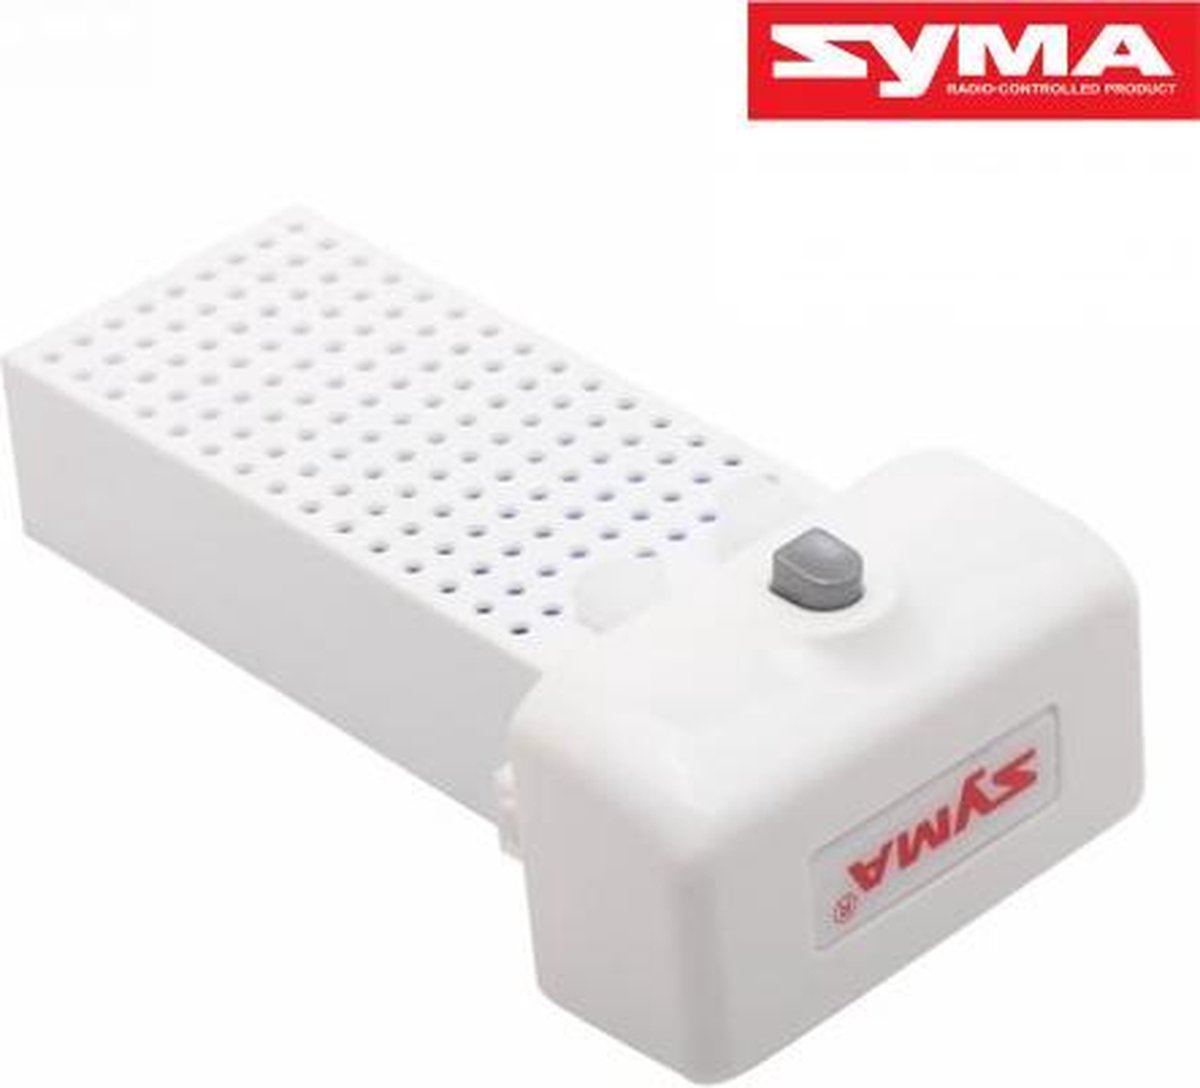 Syma accu 7.4V 2000mAh voor DRONE X8 pro - x8sw - x8sw-D - X8pro battery